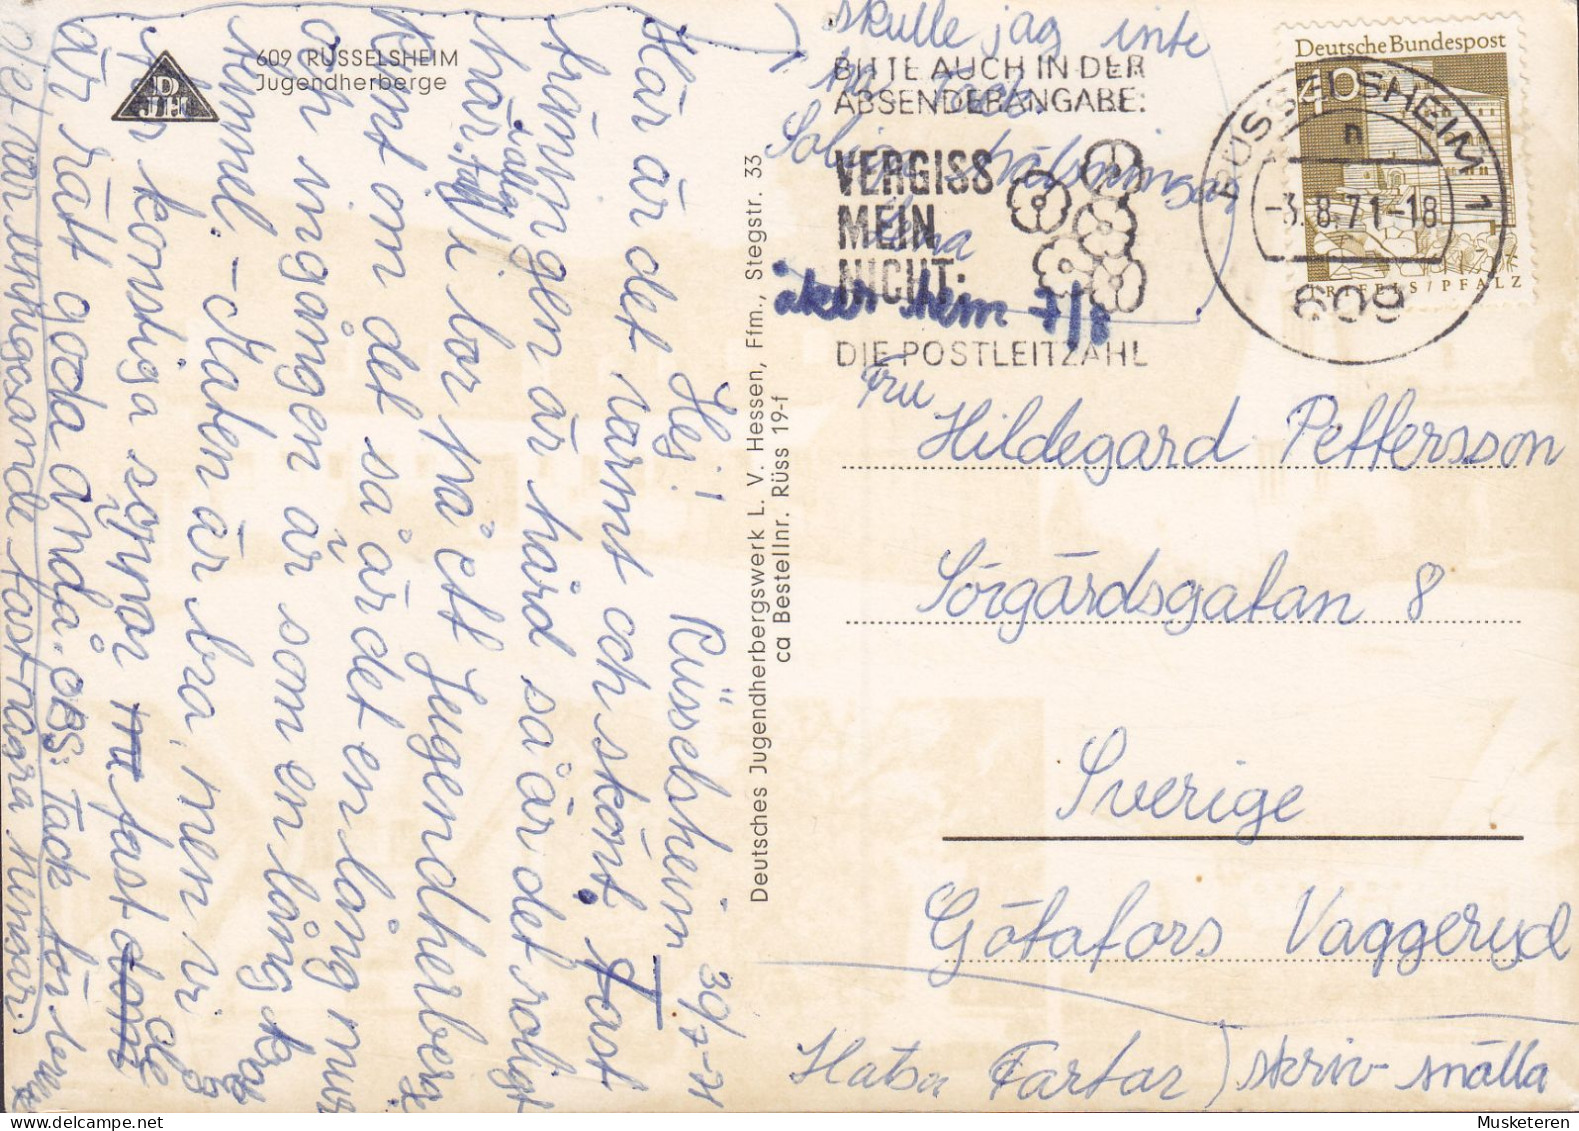 Bundespost PPC Rüsselsheim Jugendherberge L. V. Hessen Slogan RÜSSELSHEIM 1971 GÖTAFORS Vaggaryd Sweden (2 Scans) - Ruesselsheim